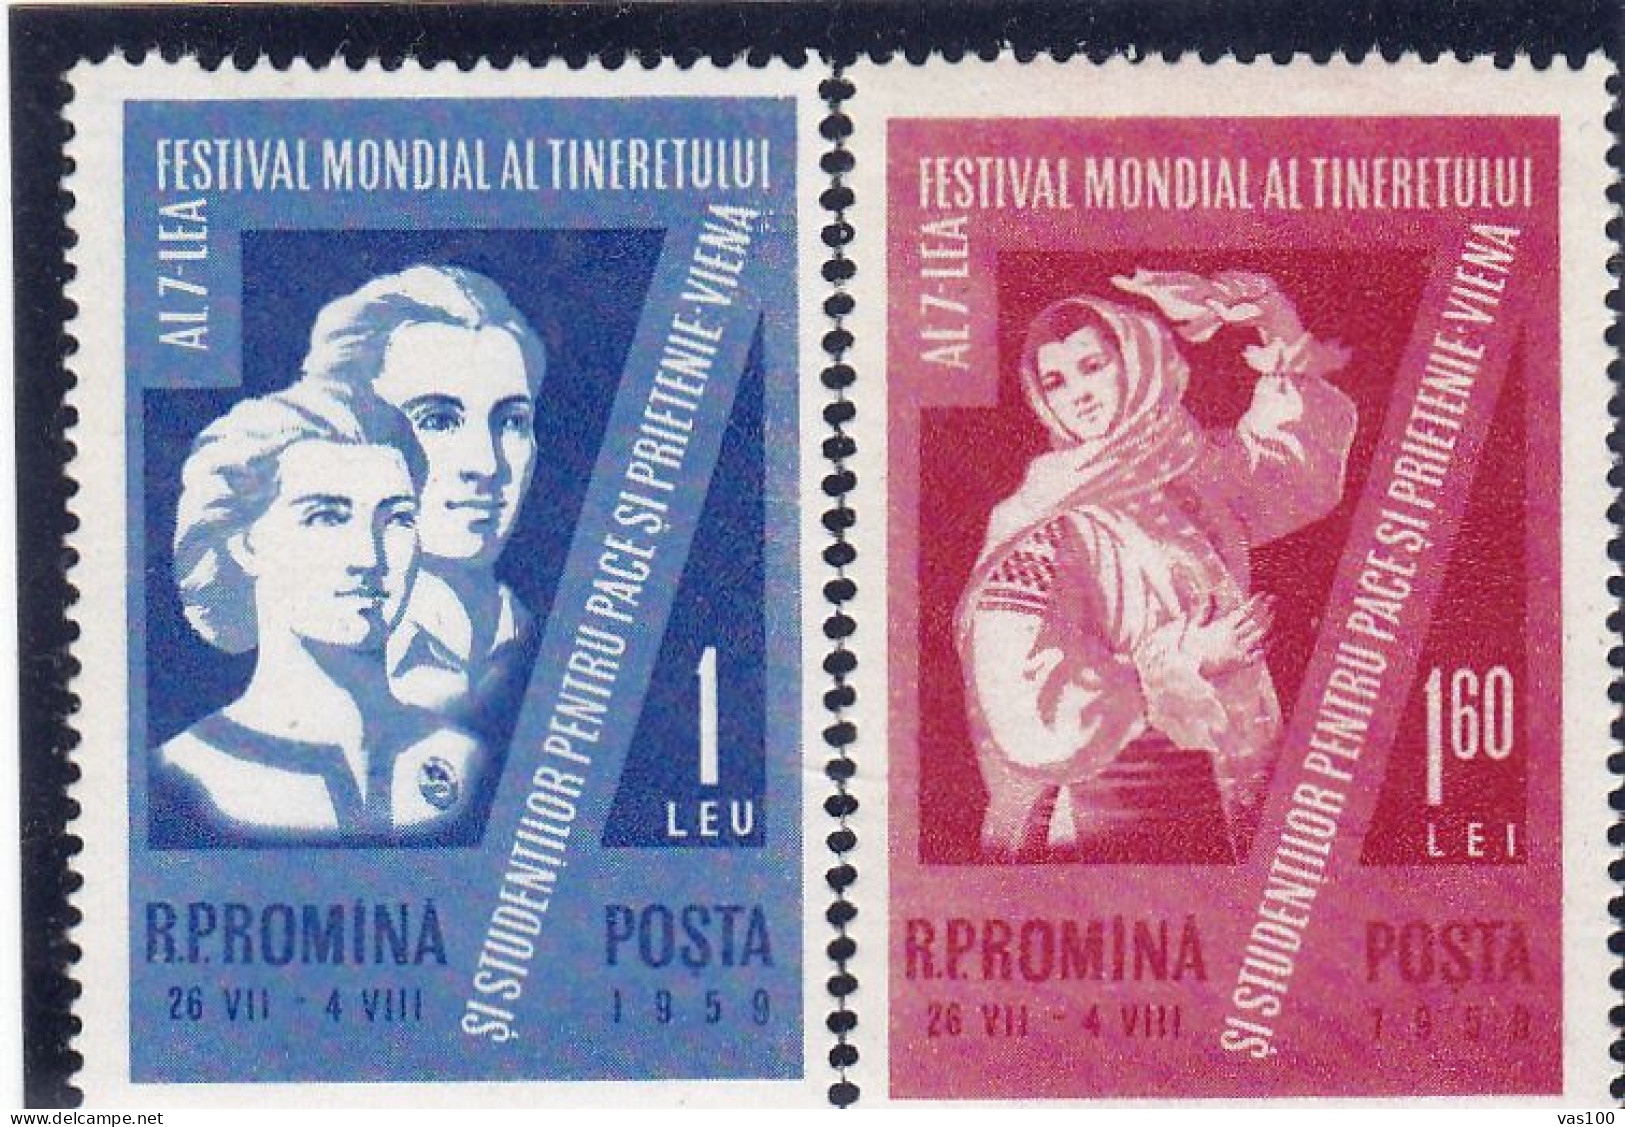 YOUTH,7TH YOUTH FESTIVAL-WIEN,1959,MI.1790/91, MNH**, ROMANIA. - Ongebruikt